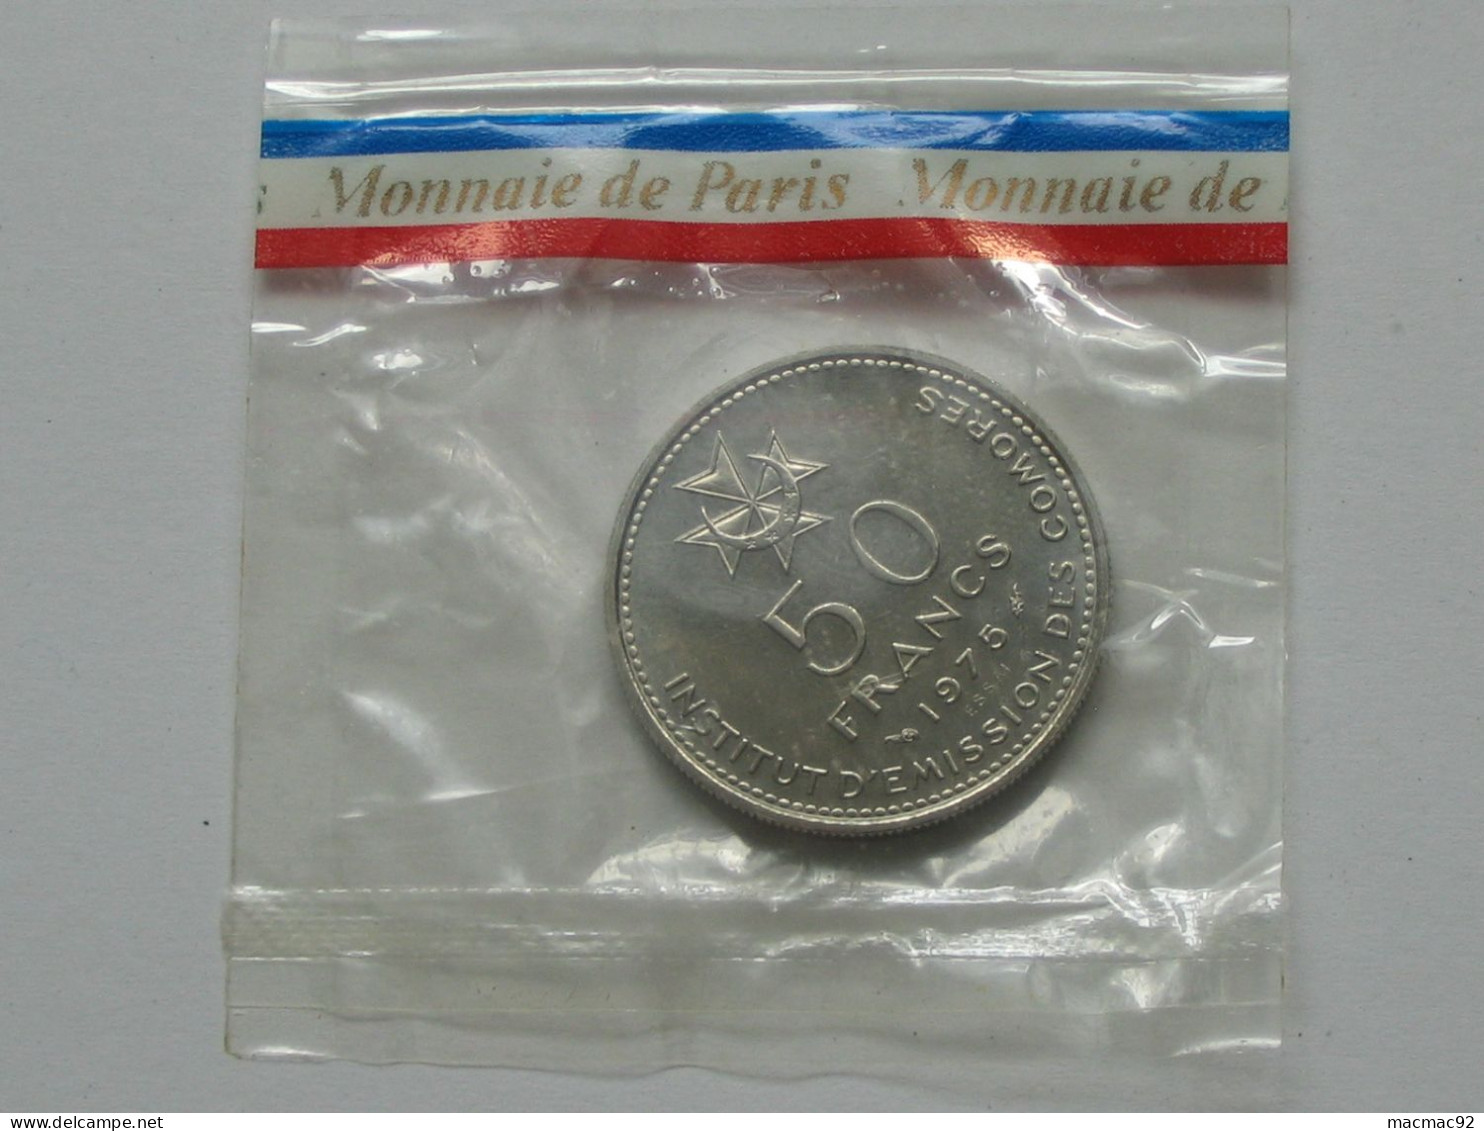 COMORES - RARE Essai  De La 50 Francs 1975 - Institut D'émission Des Comores **** EN ACHAT IMMEDIAT **** - Comores